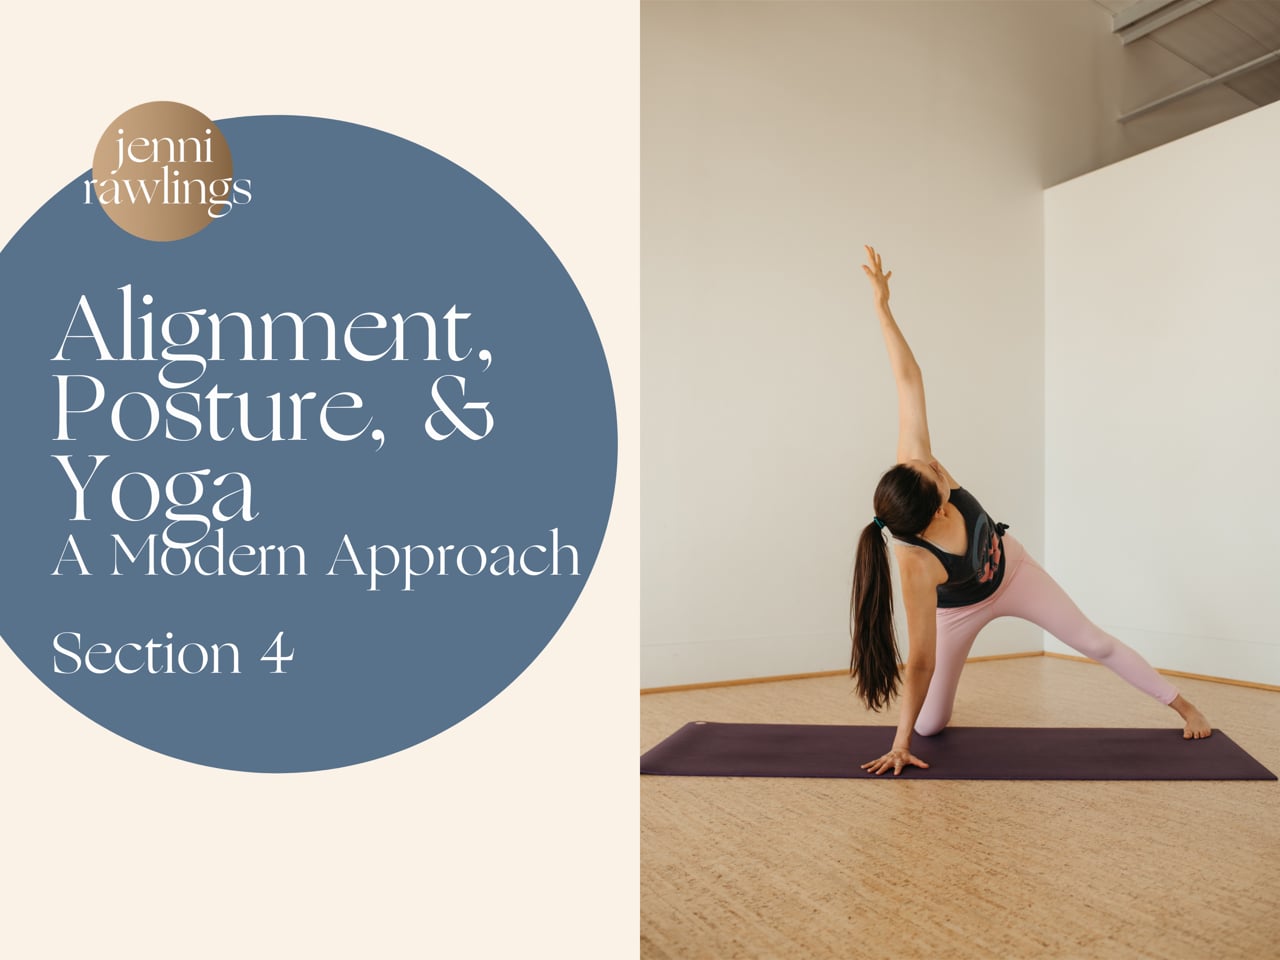 Section 4 – Alignment, Posture, & Yoga